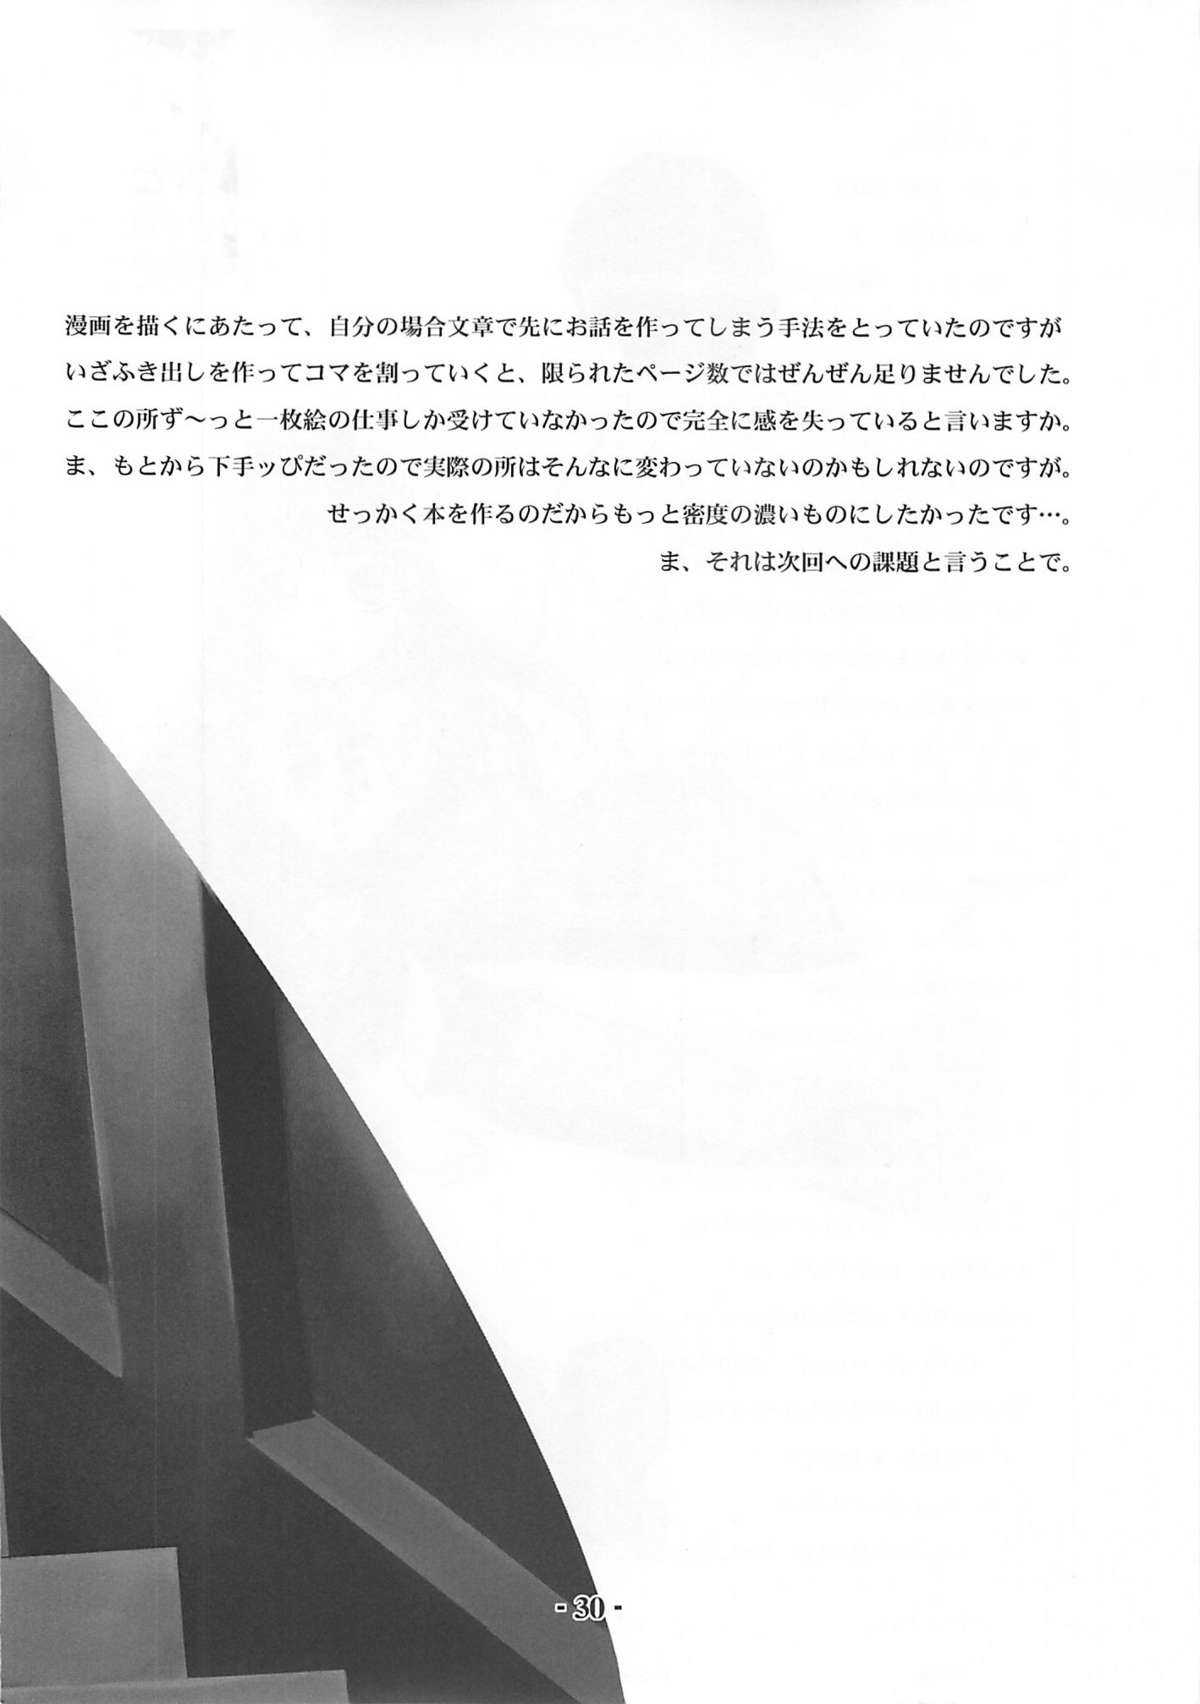 [Bodley Head (Sonobe Kazuaki)] Millefeuille (Original) [Bodley Head (園部一晶)] Millefeuille (オリジナル)